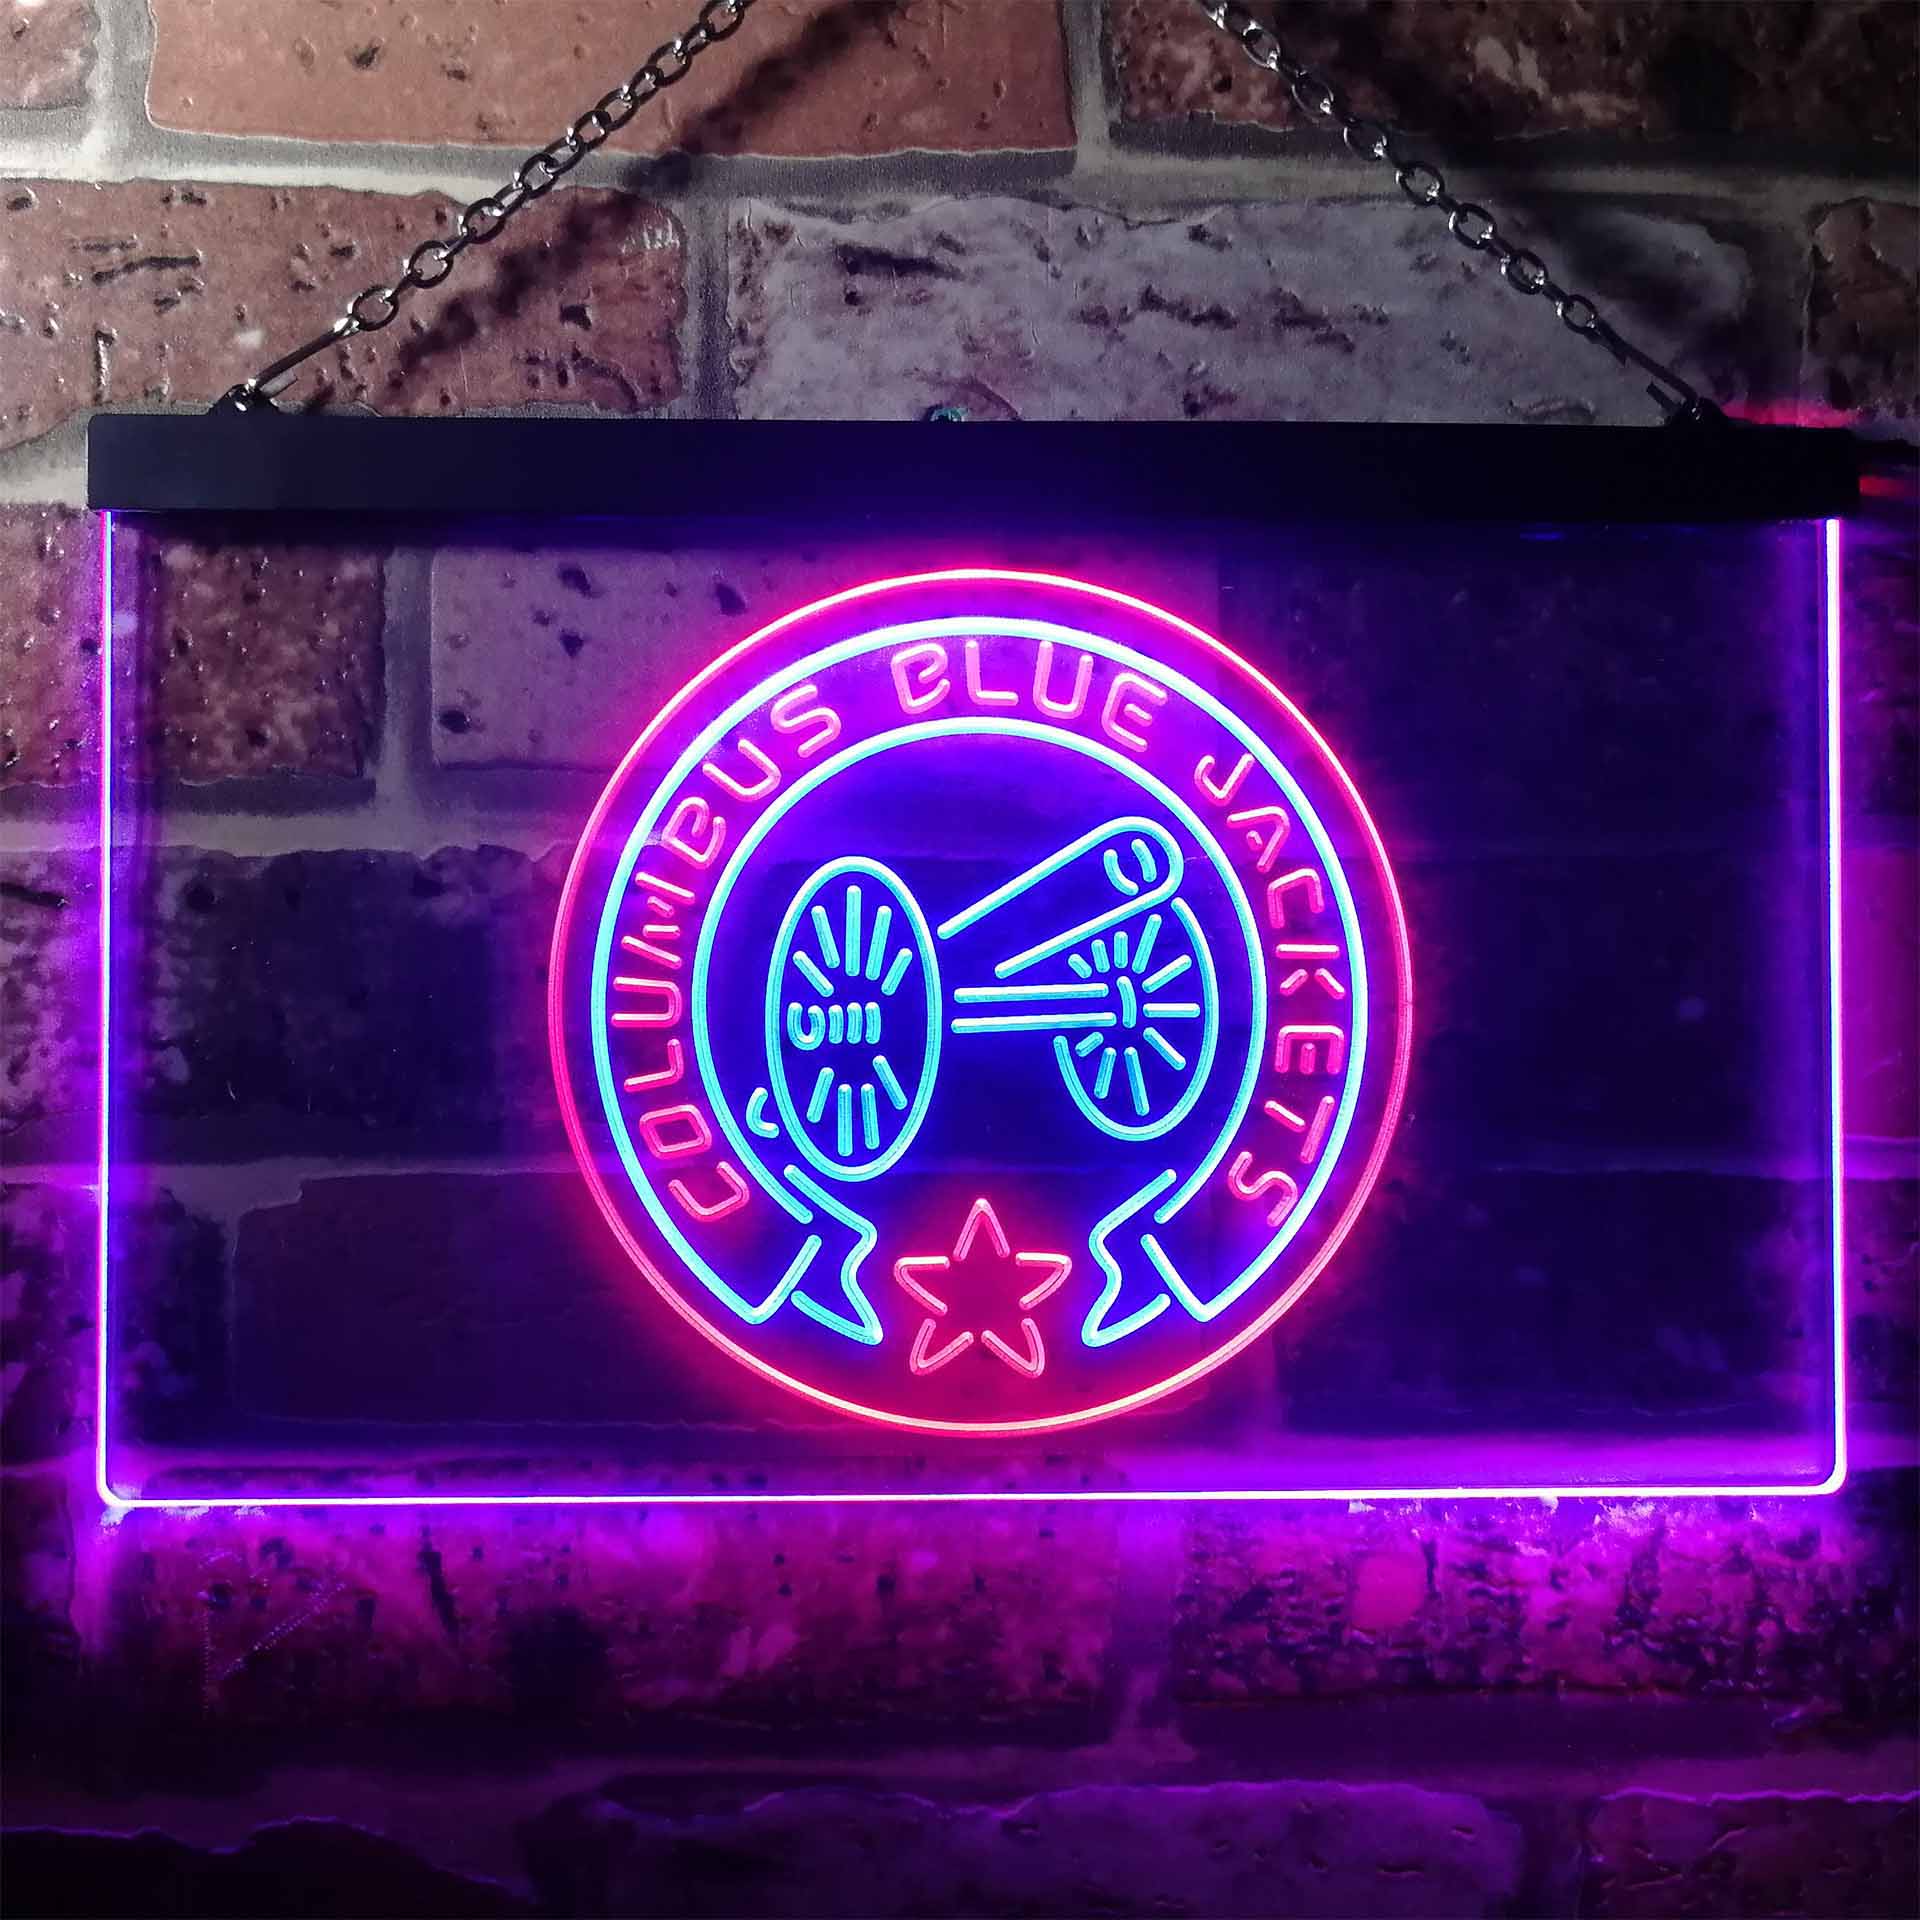 Columbus Blue Jackets League Club LED Neon Sign